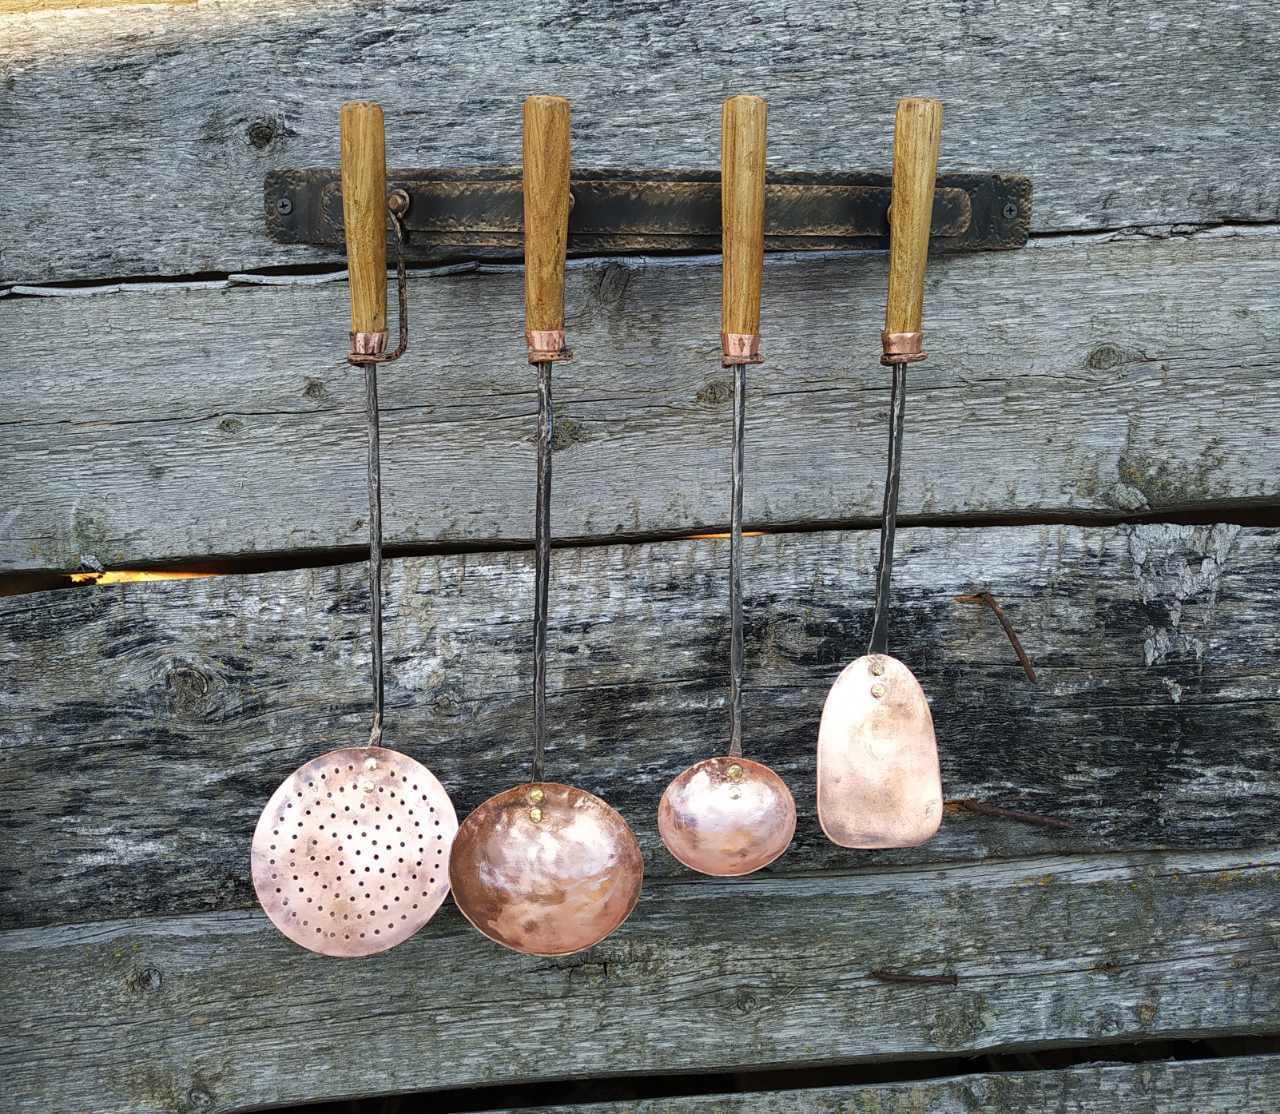 Copper serving set, medieval cutlery, ladle, ladle water dipper, spatula, medieval gift, copper ladle, serving utensils,kitchen utensils